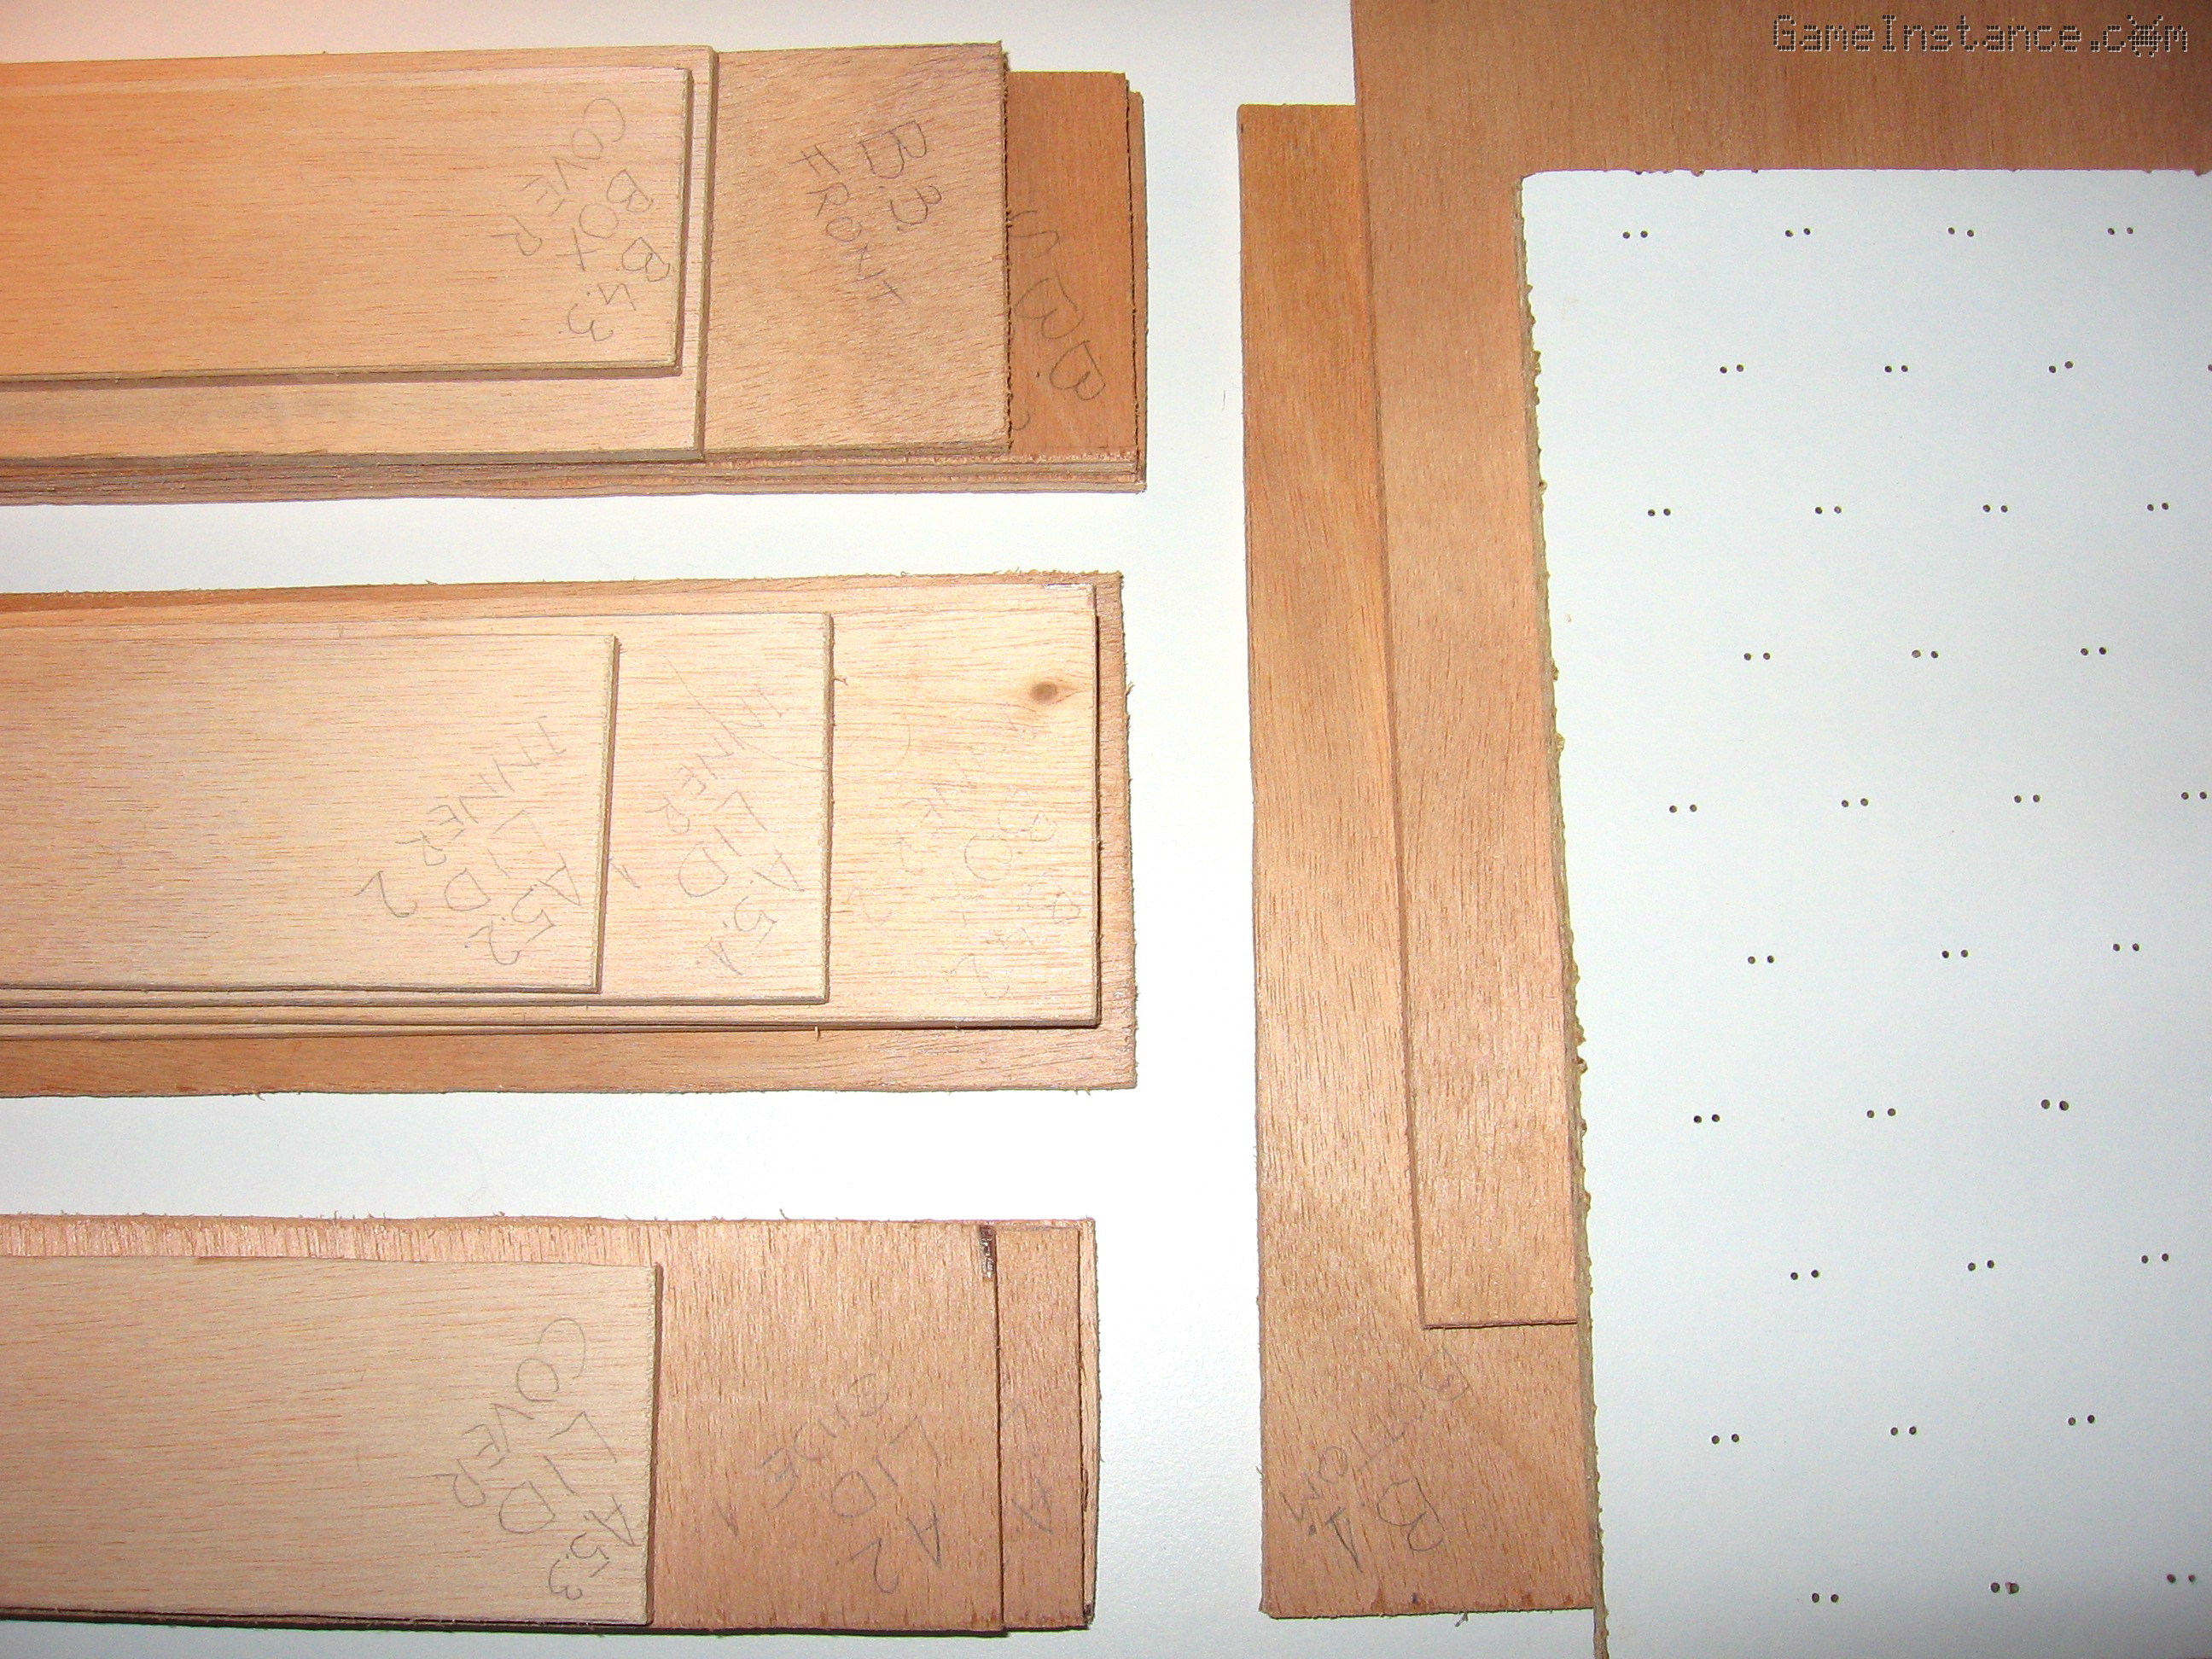 UV-Box - the not-so-straight hand-cut plywood panels